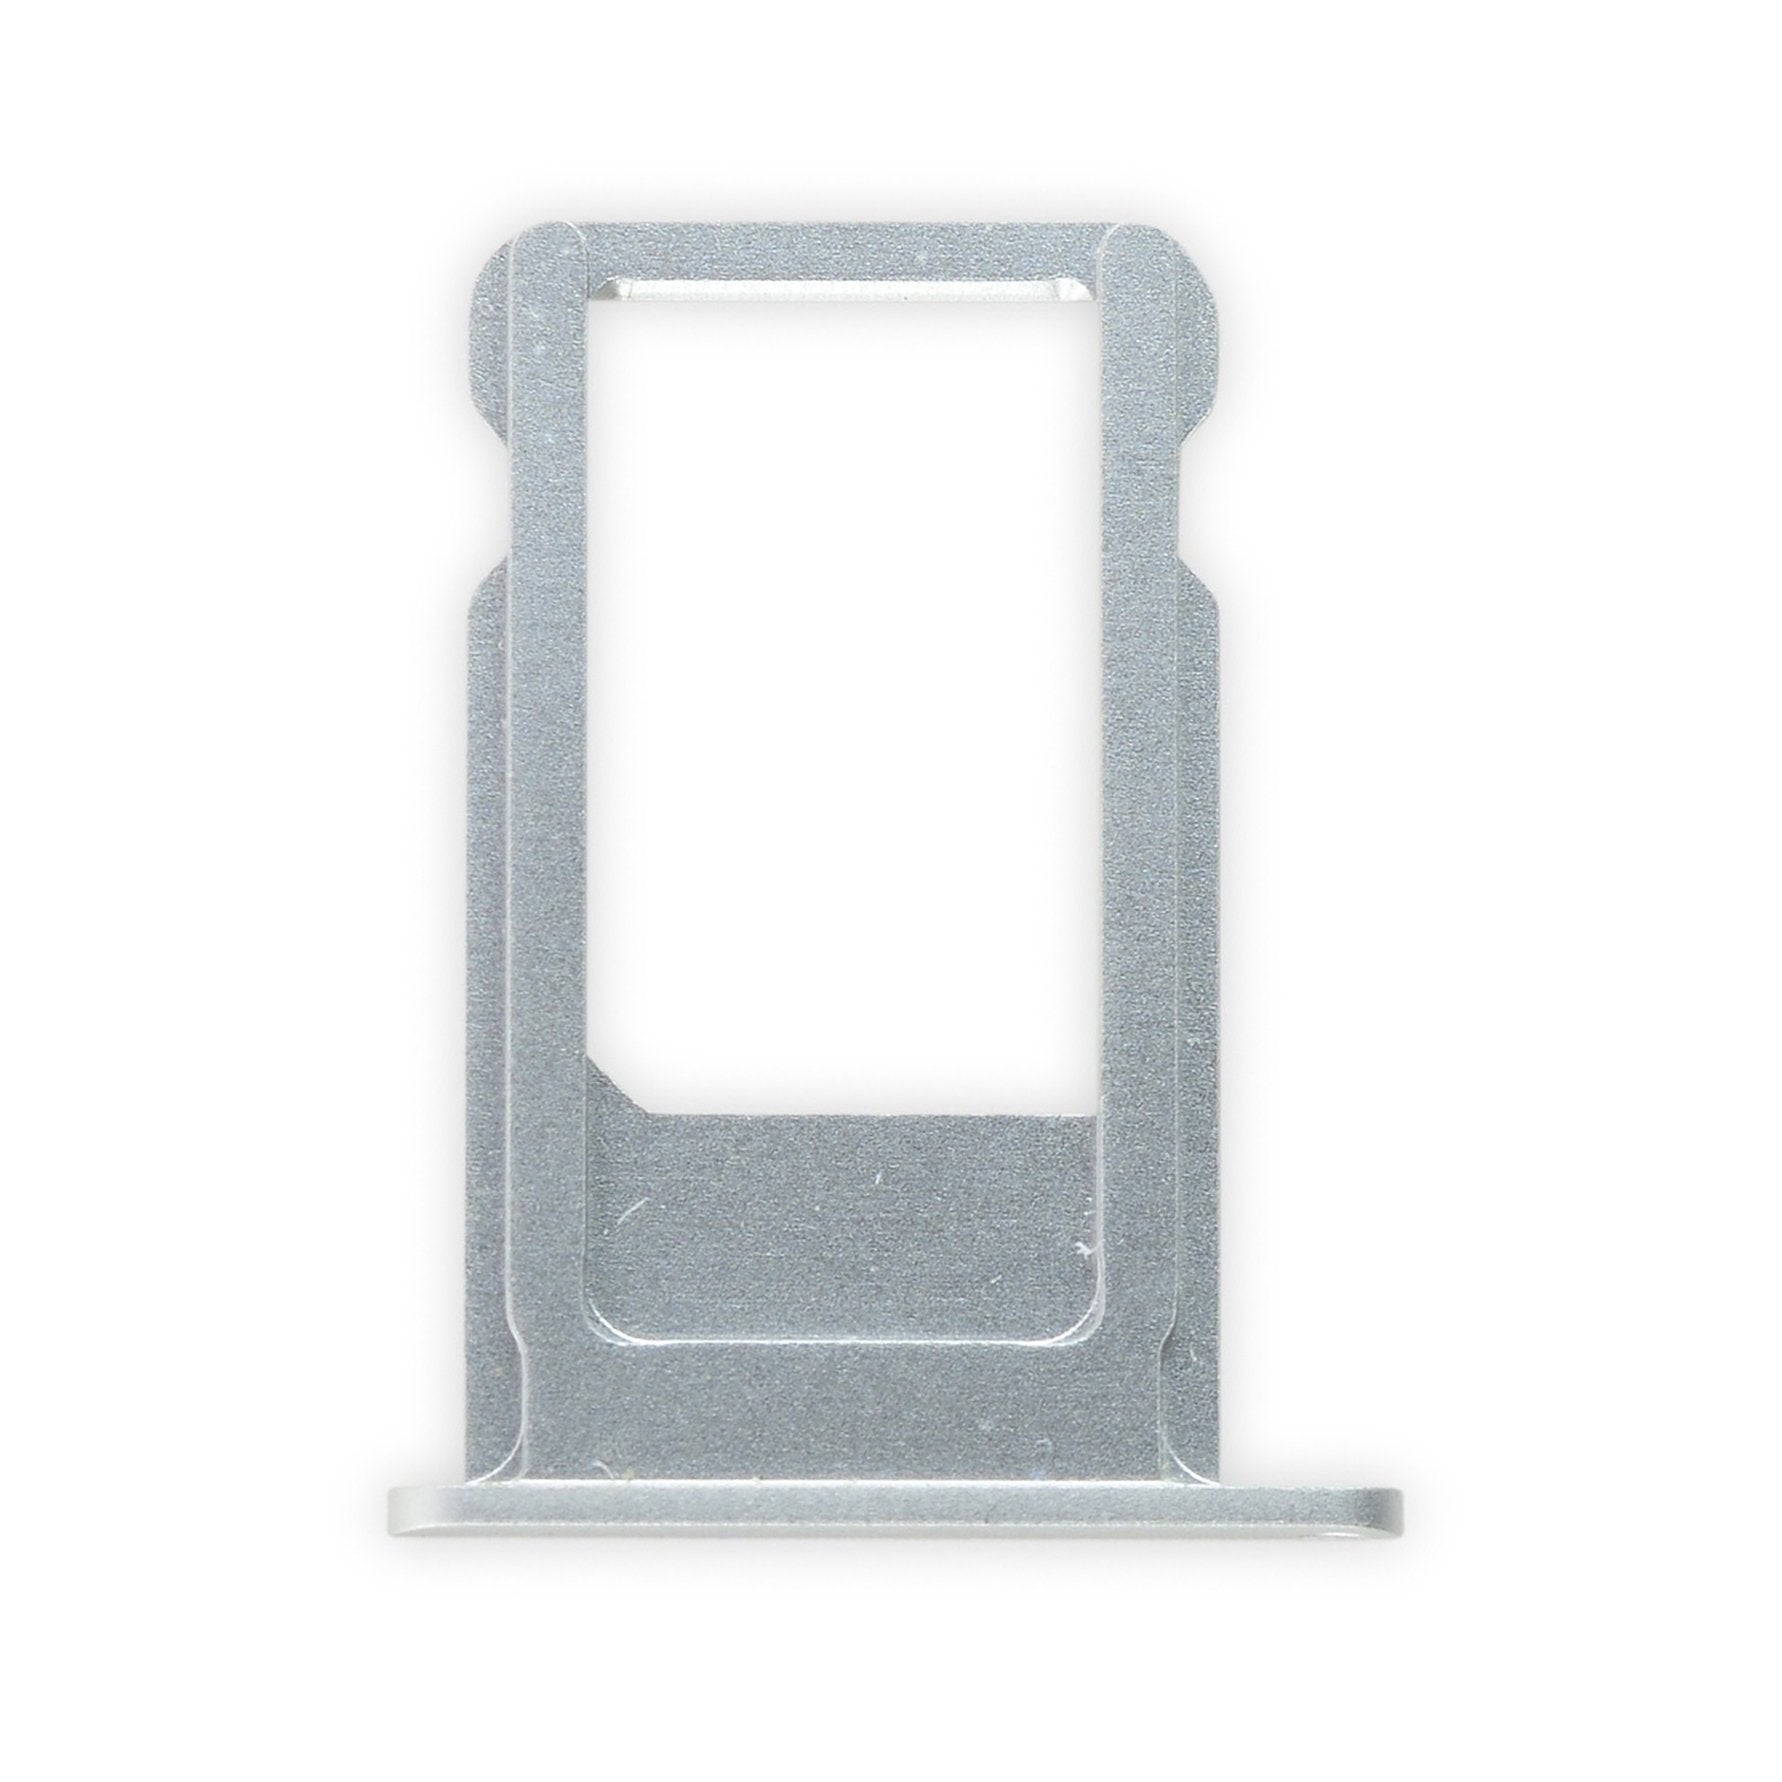 iPhone 6s Nano SIM Card Tray Silver New